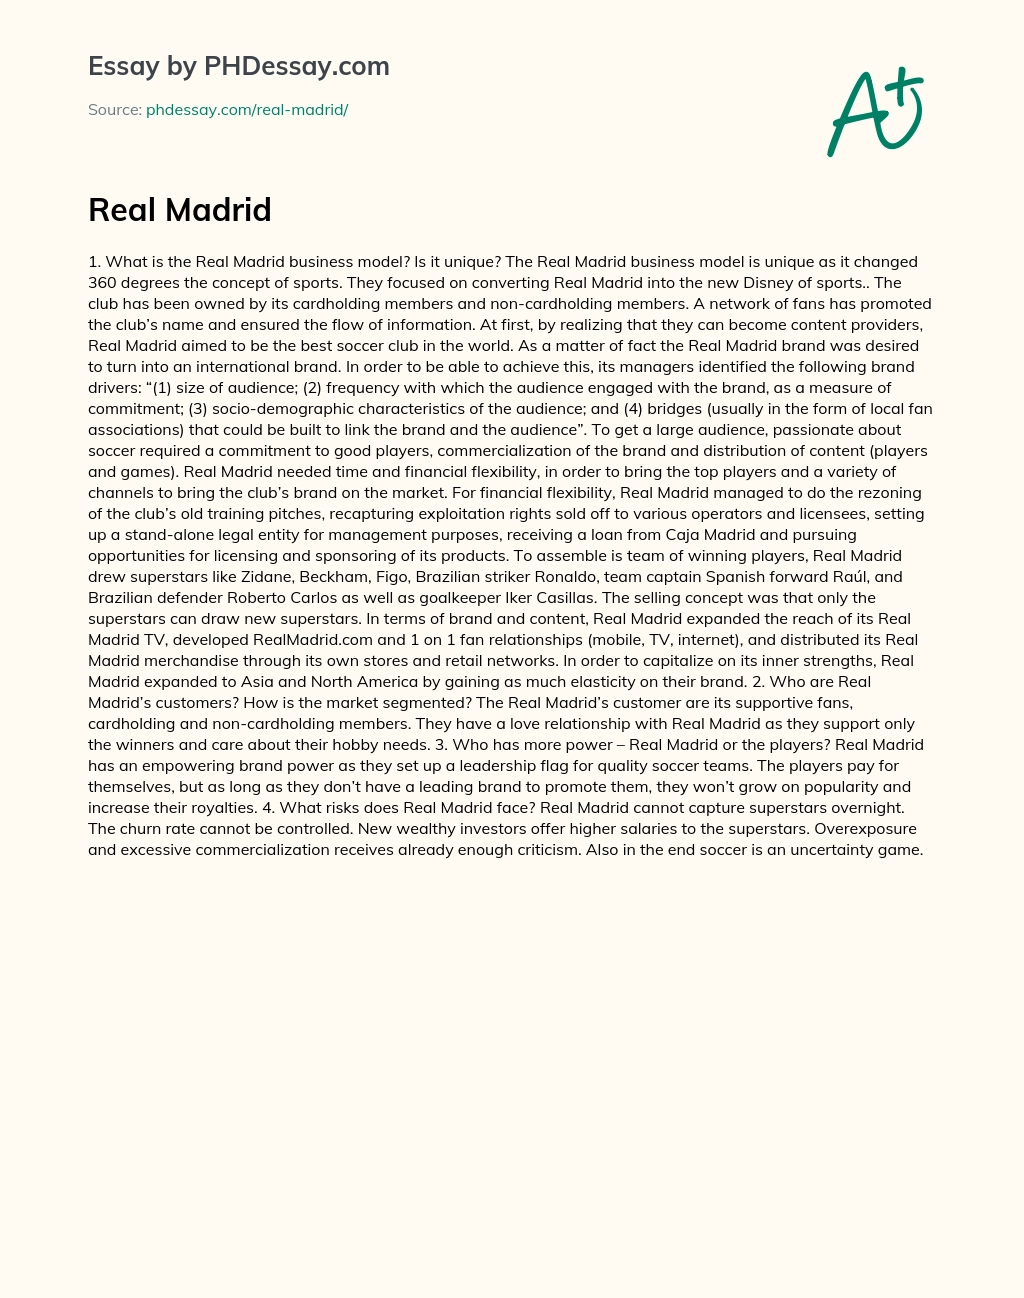 Real Madrid Business Model essay